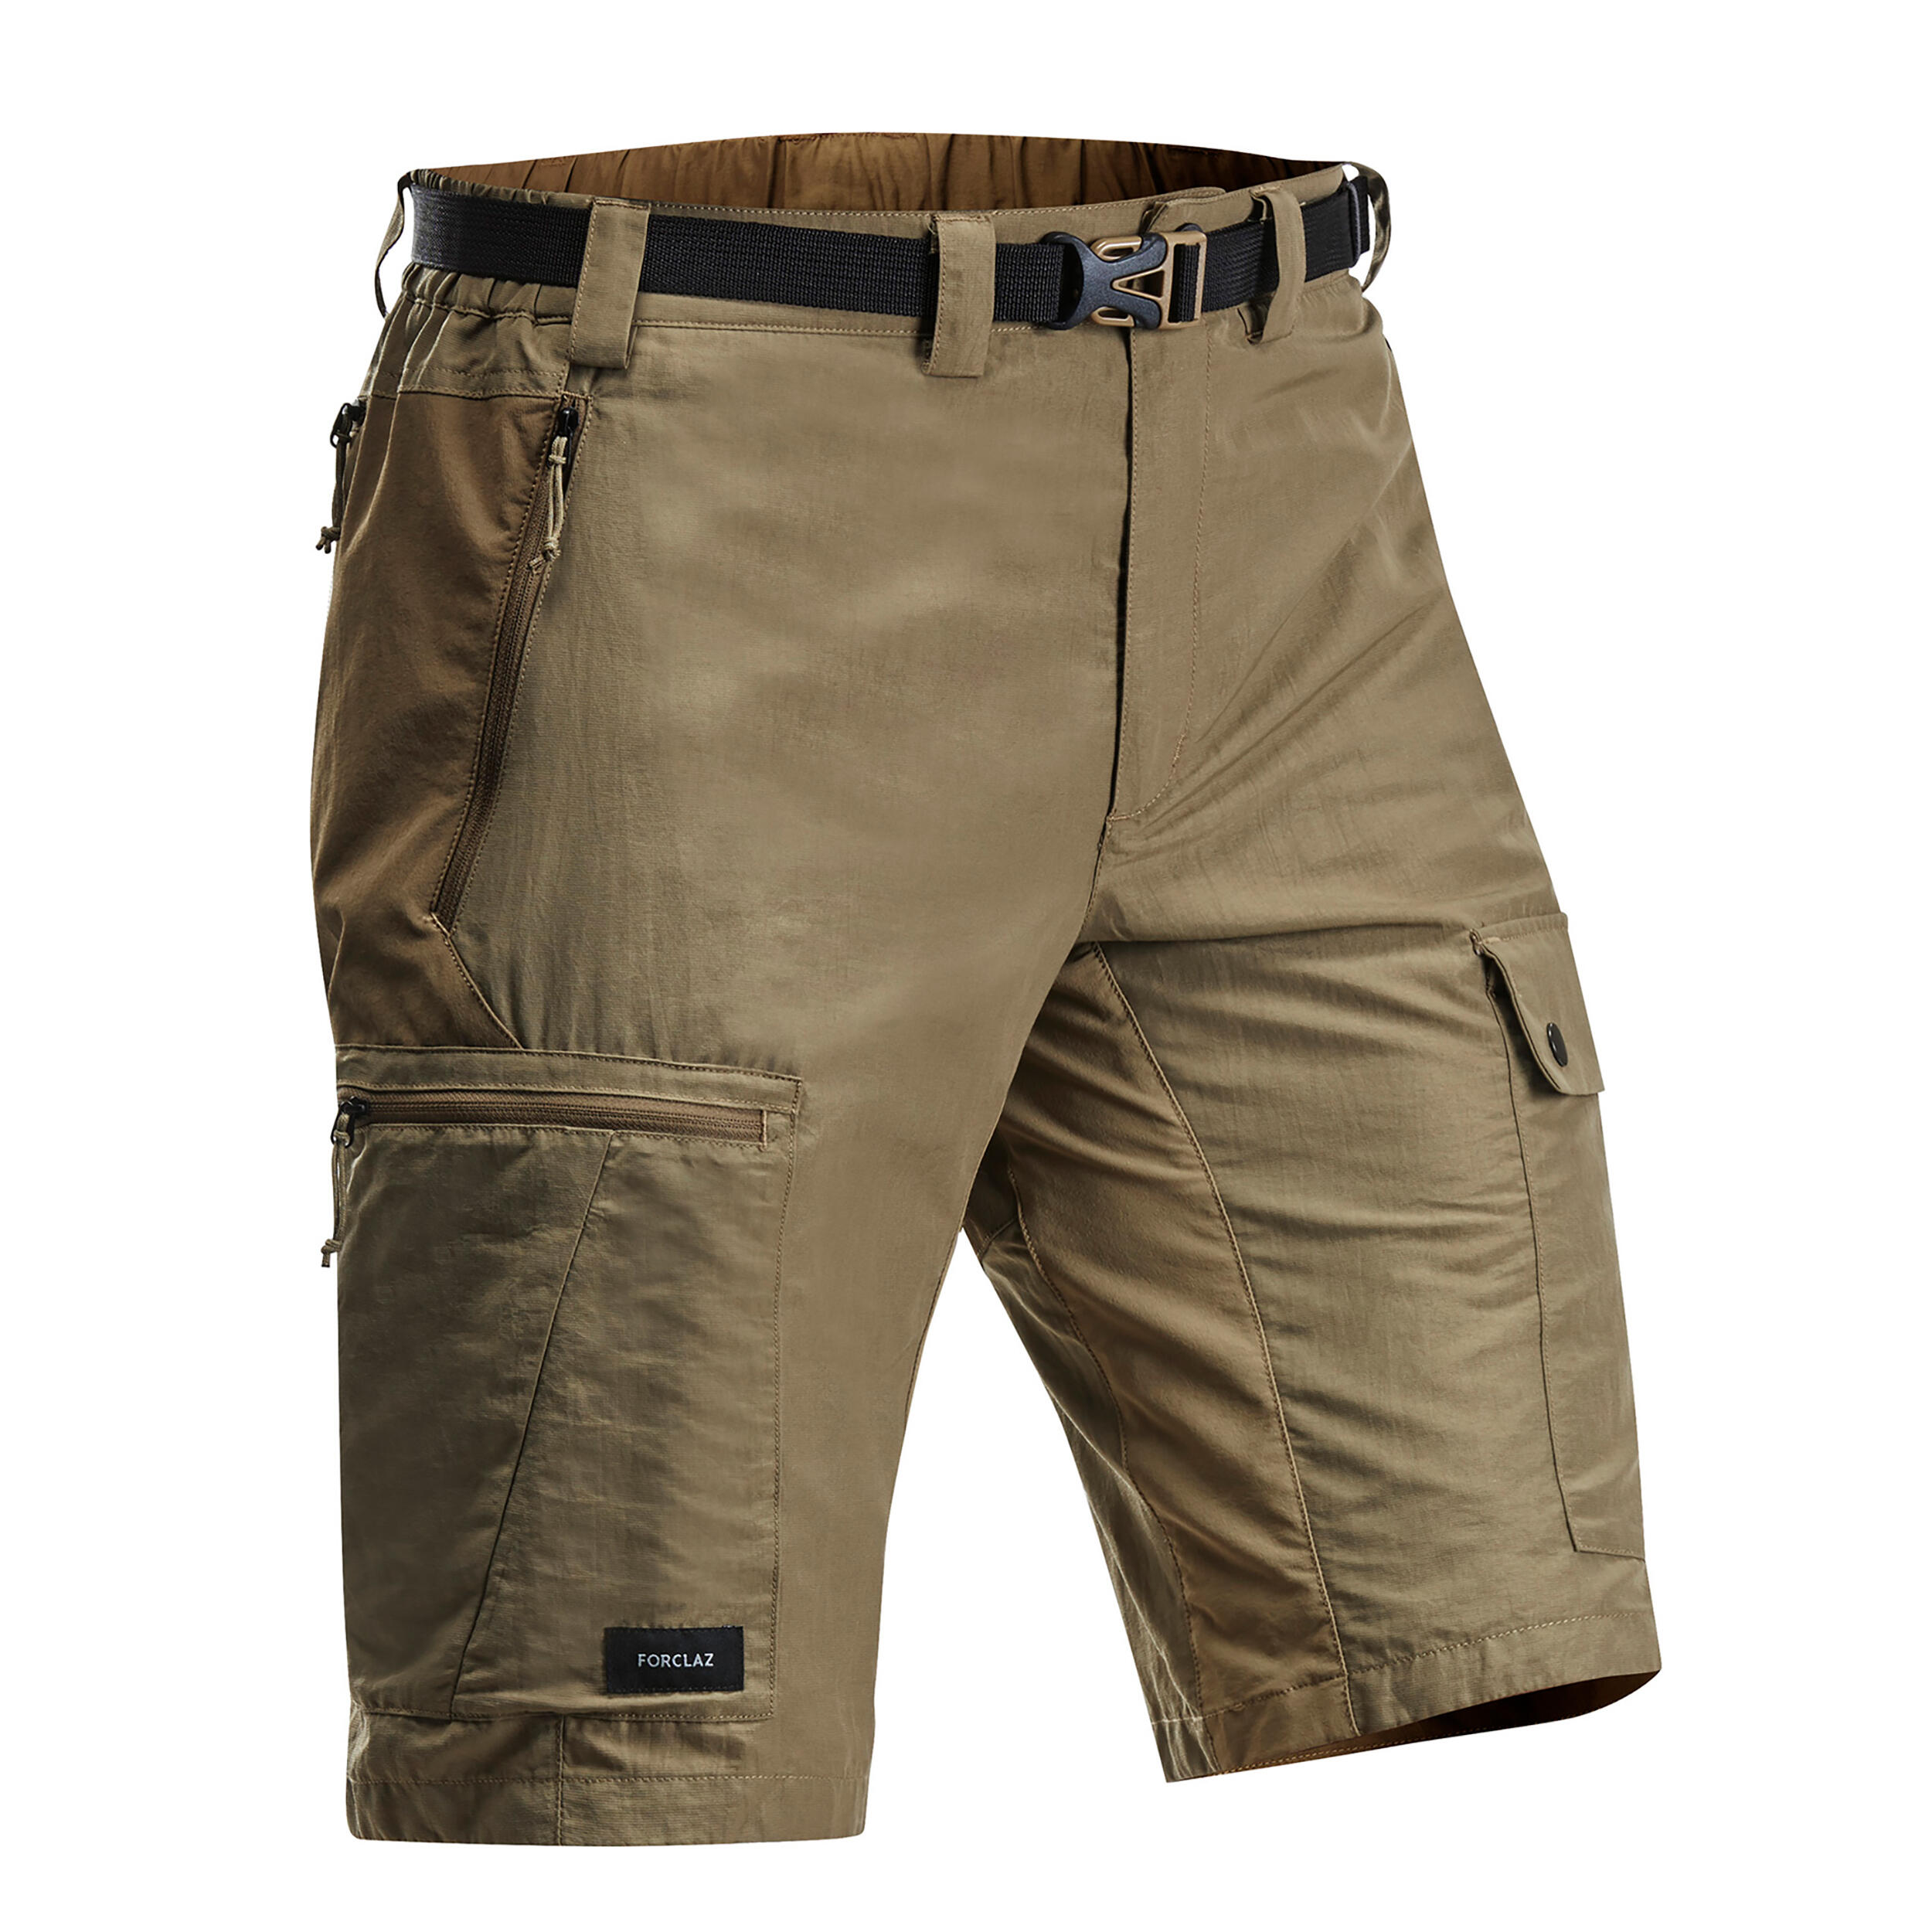 Men's Hiking Shorts - MT 500